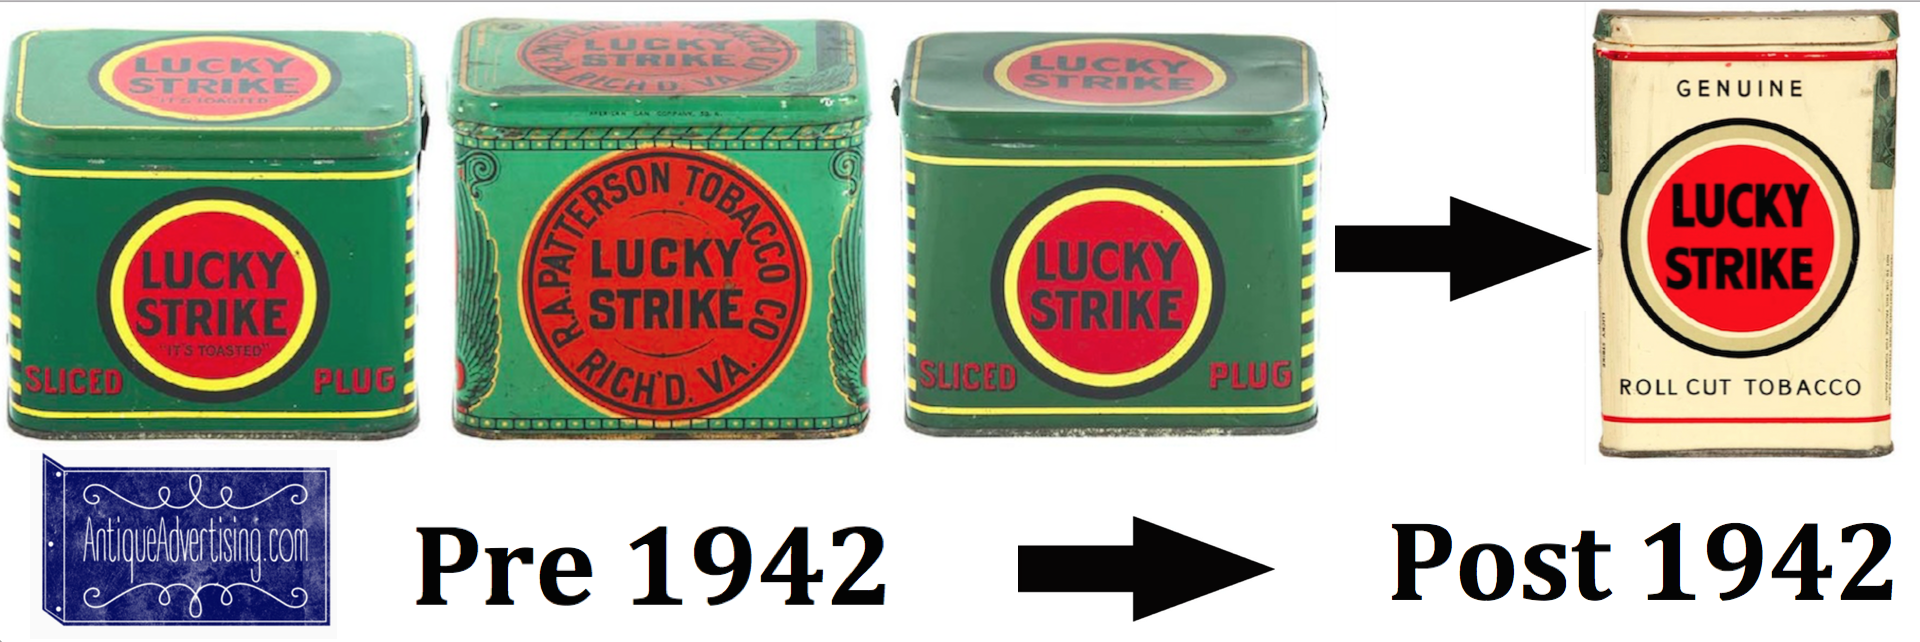 lucky strike history